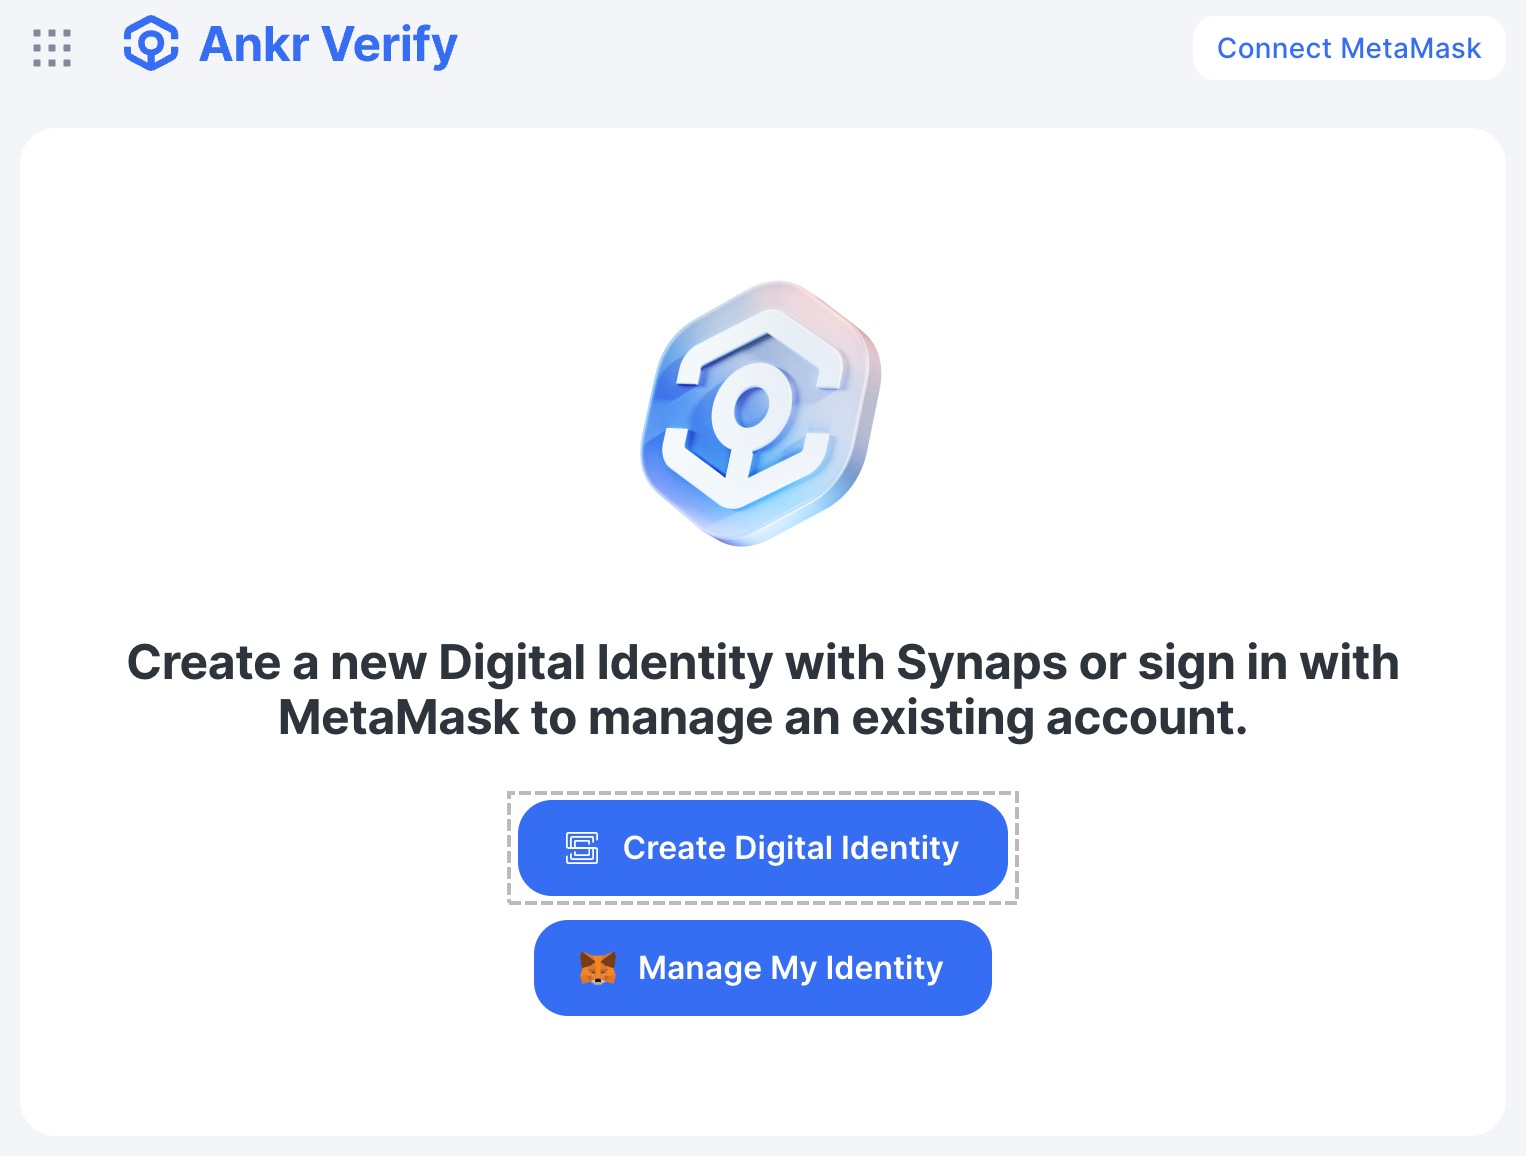 Click Create Digital Identity